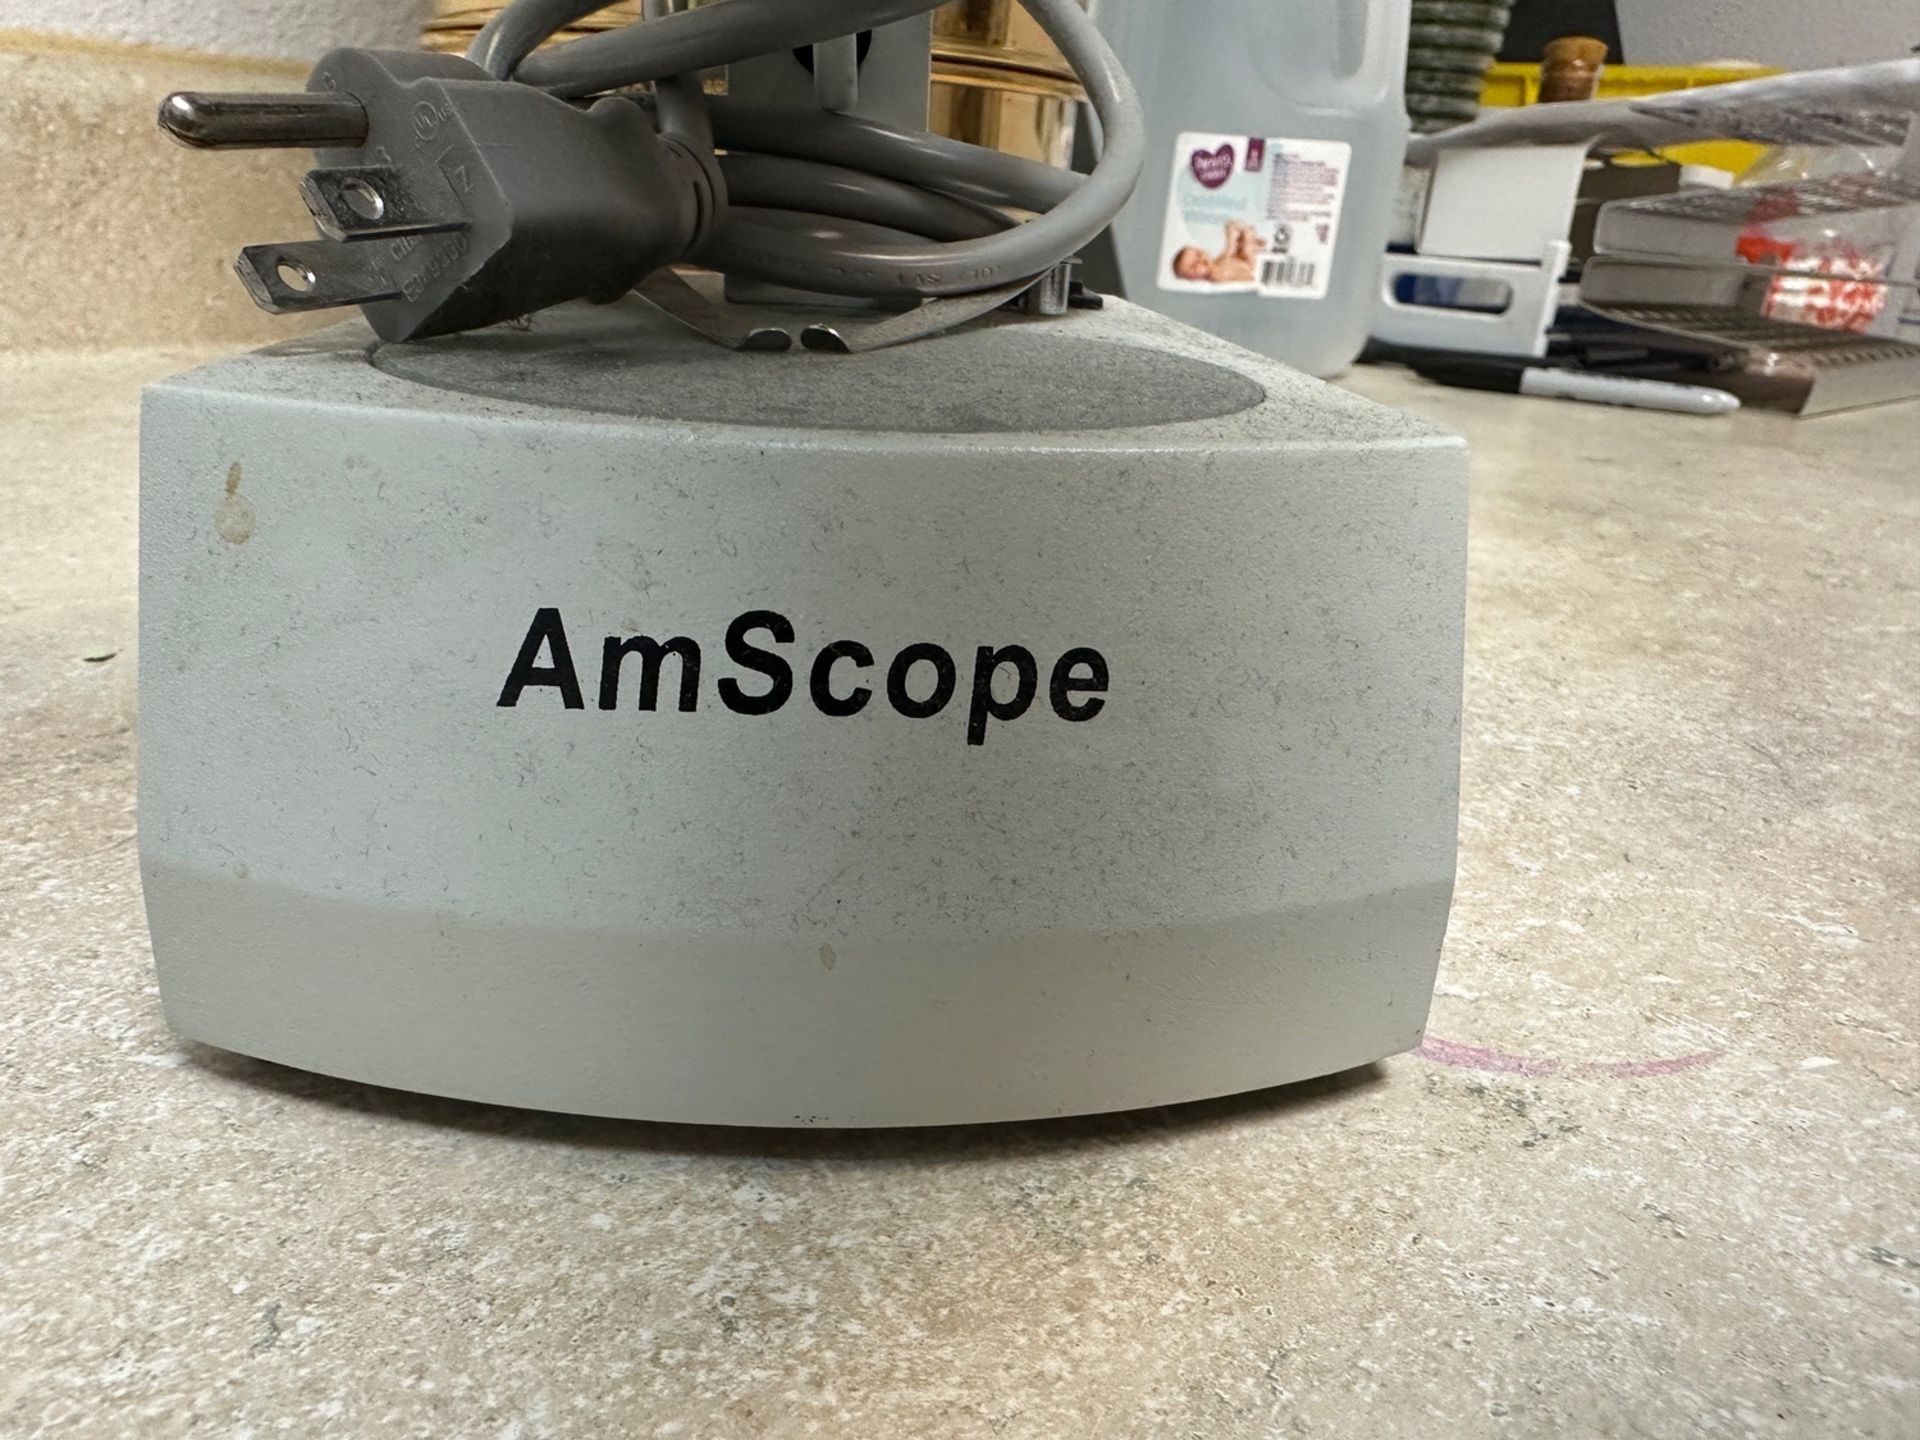 AmScope Lab Microscope | Rig Fee $20 - Image 2 of 2